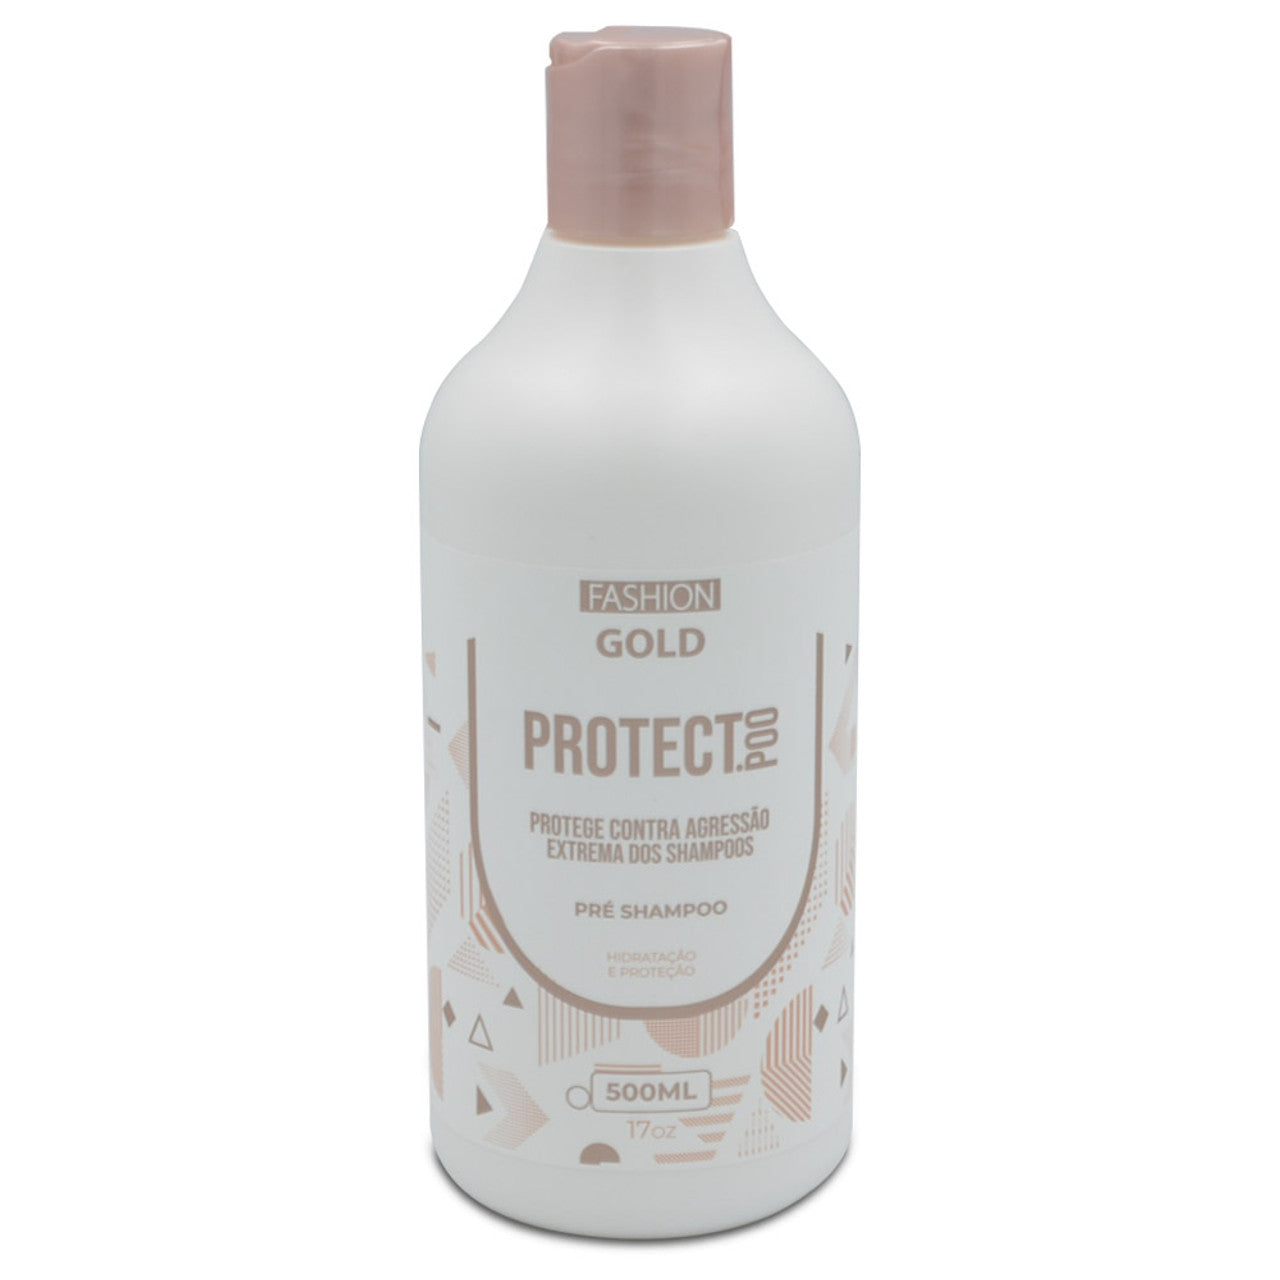 Pré Shampoo Protect Poo 250ml - Fashion Gold